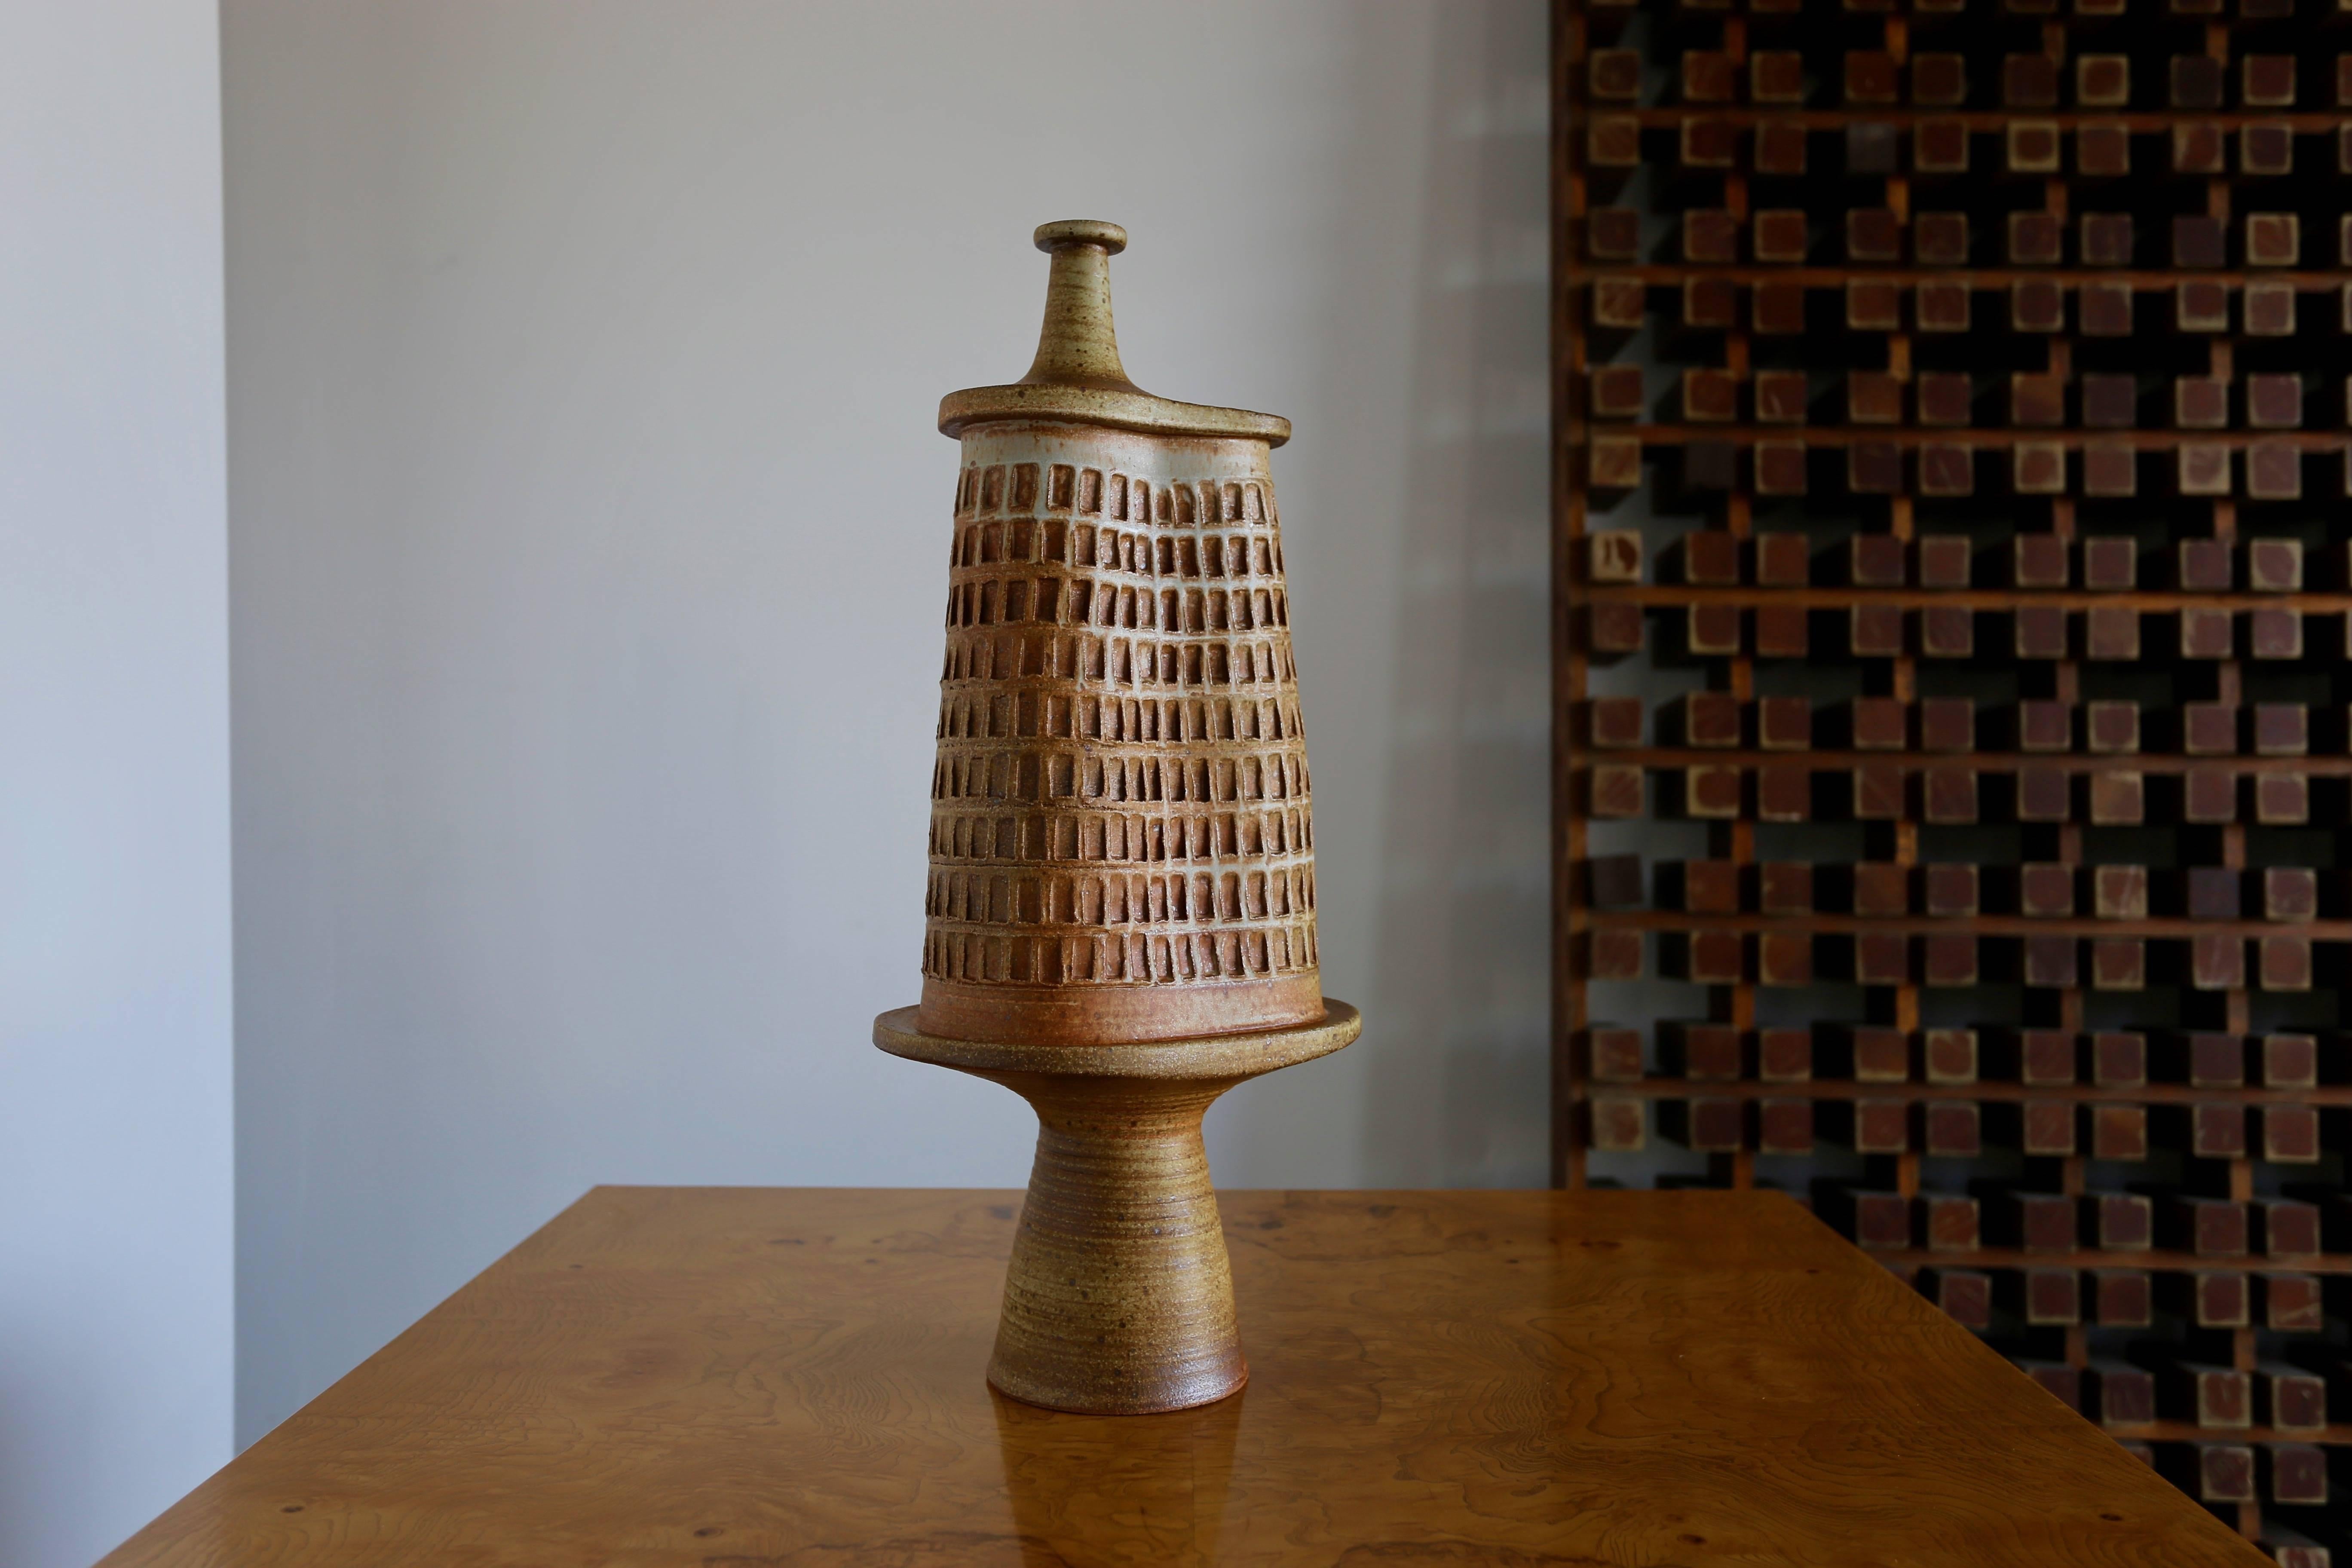 Sculptural ceramic vase by Tim Keenan.